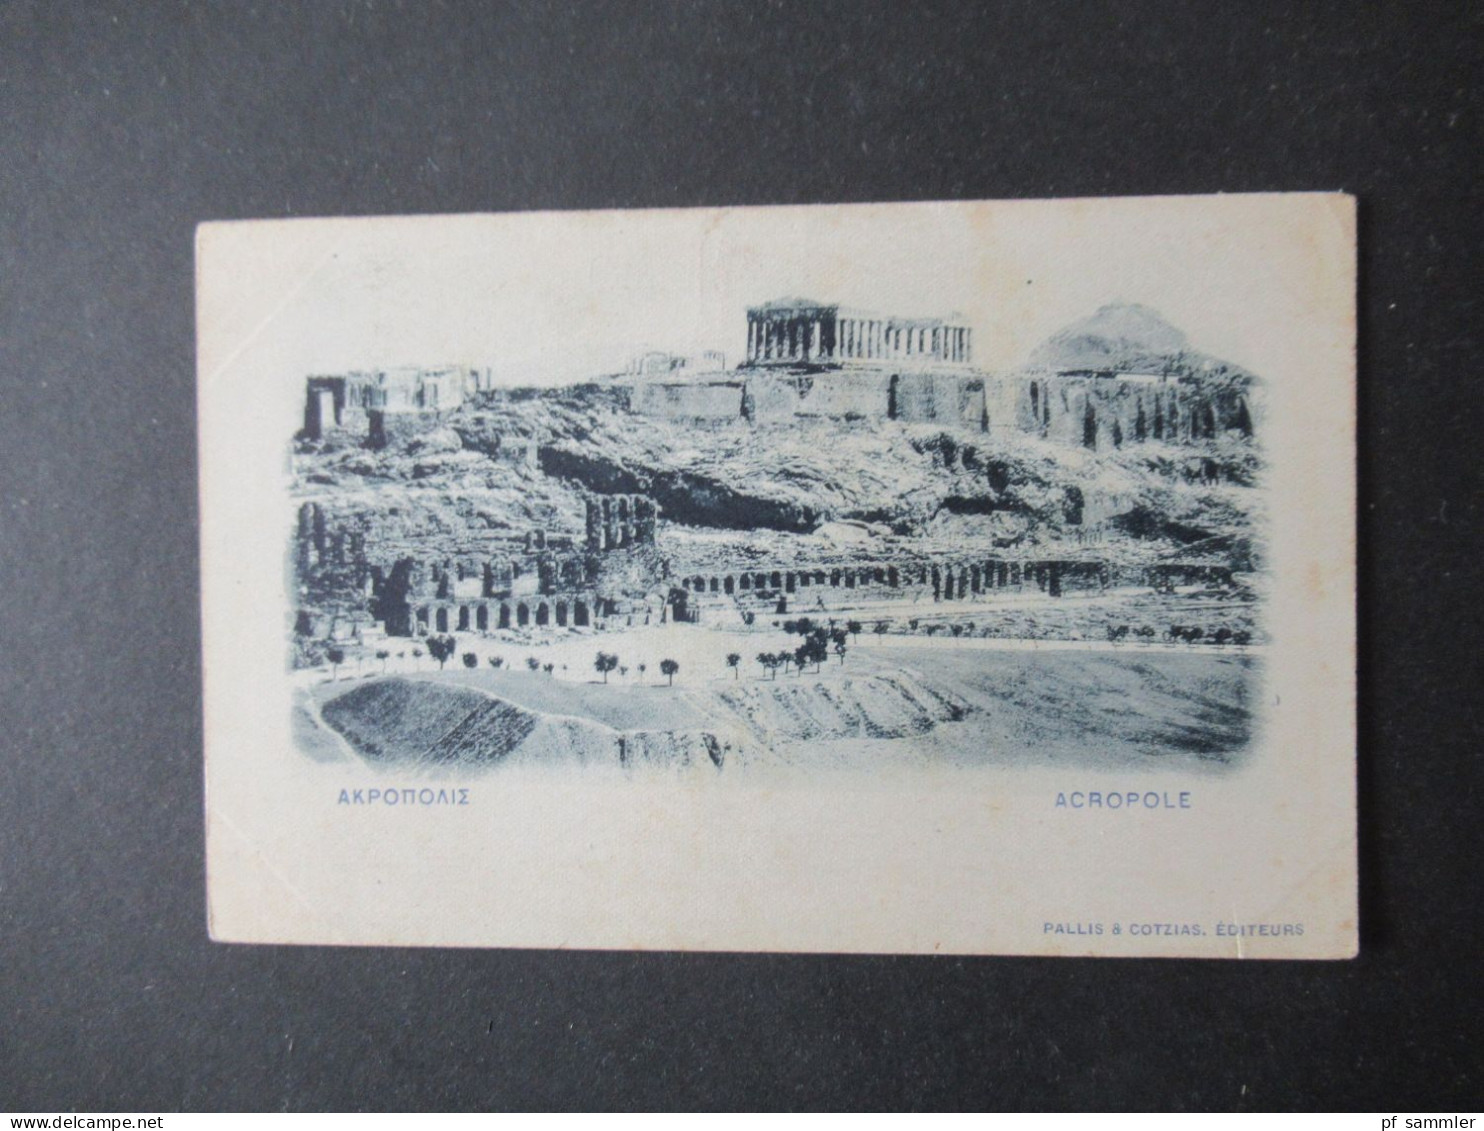 Griechenland Um 1900 Ganzsache Bild PK Carte Postale Reponse / Acropole Pallis & Cotzias Editeurs Ungebraucht! - Ganzsachen